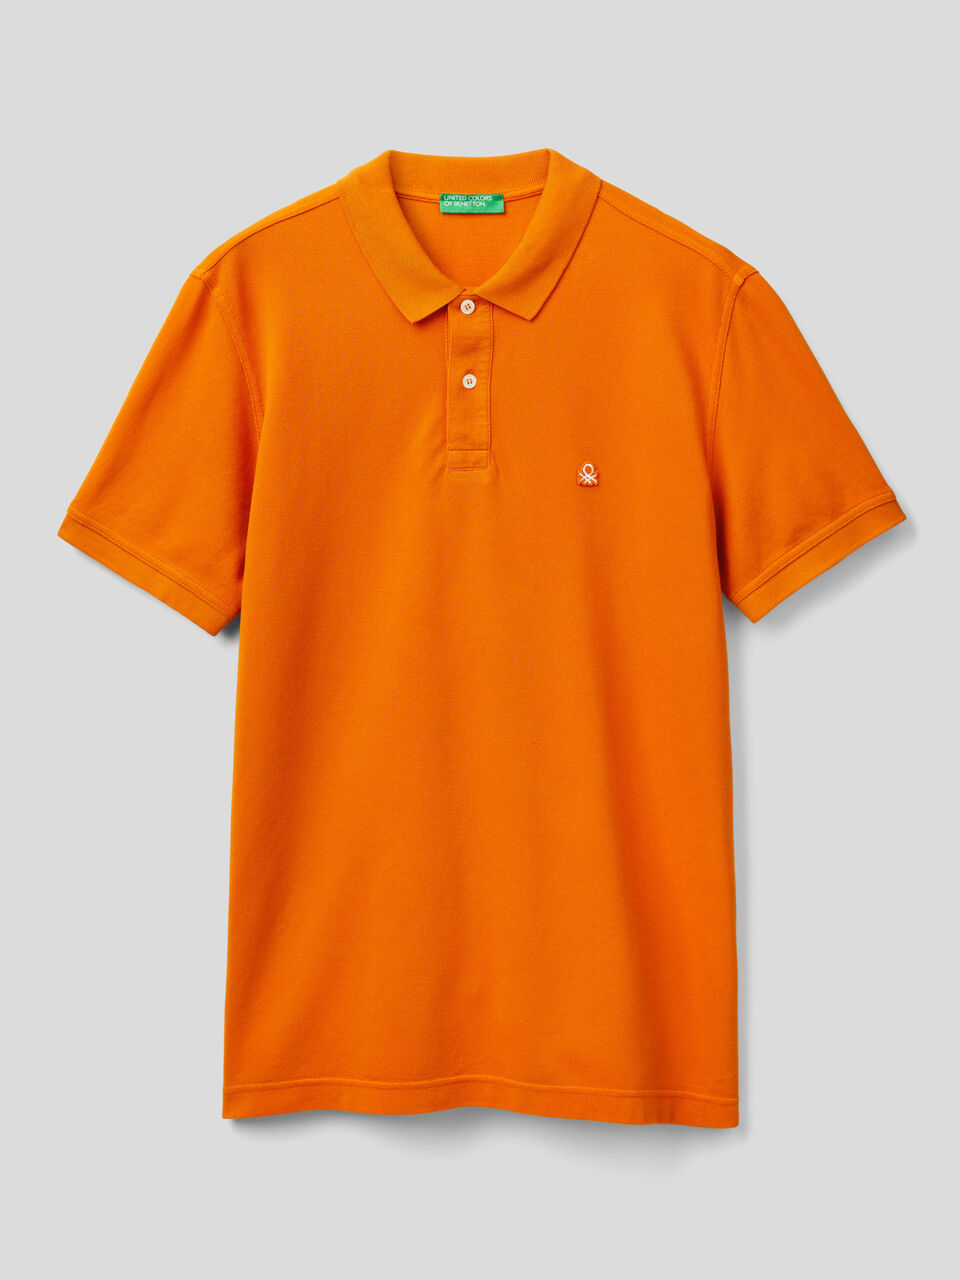 Camiseta polo para hombre color naranja Bolf GD02 naranja